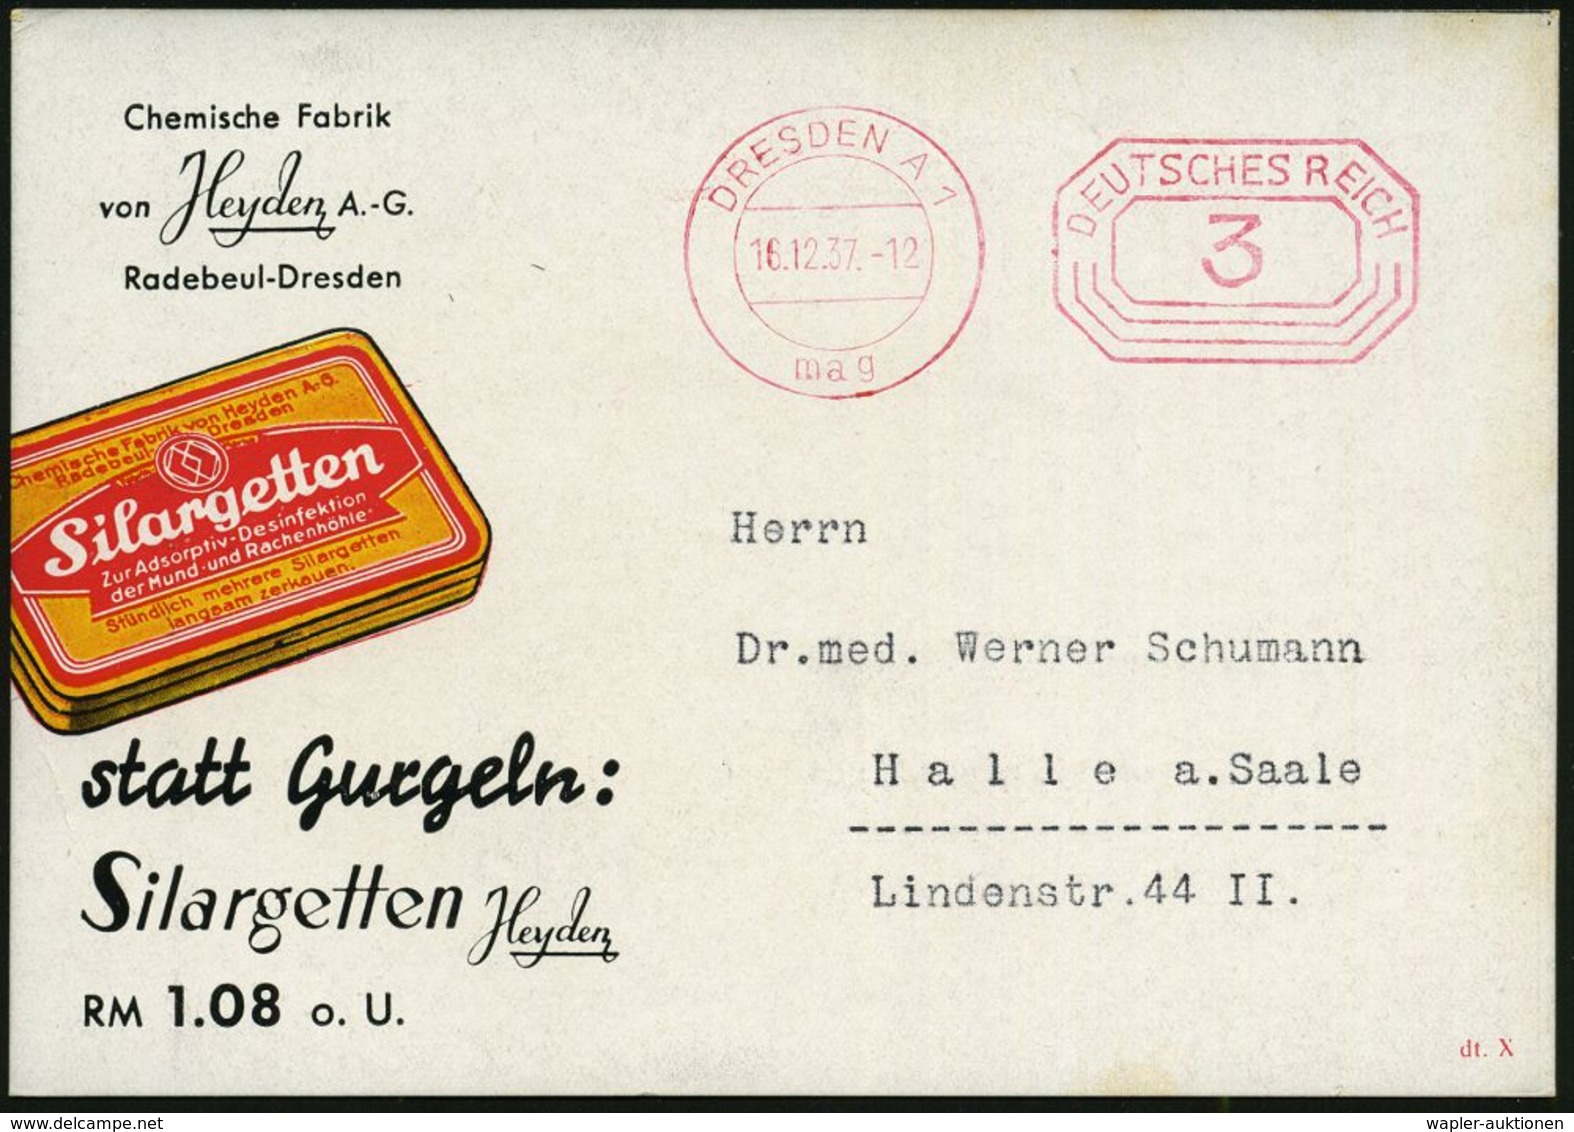 PÄDIATRIE / GYNÄKOLOGIE : DRESDEN A 1/ Mag 1937 (16.12.) PFS 3 Pf. Auf Color-Reklame-Kt.: Silargetten Heyden AG. (Pharma - Disease